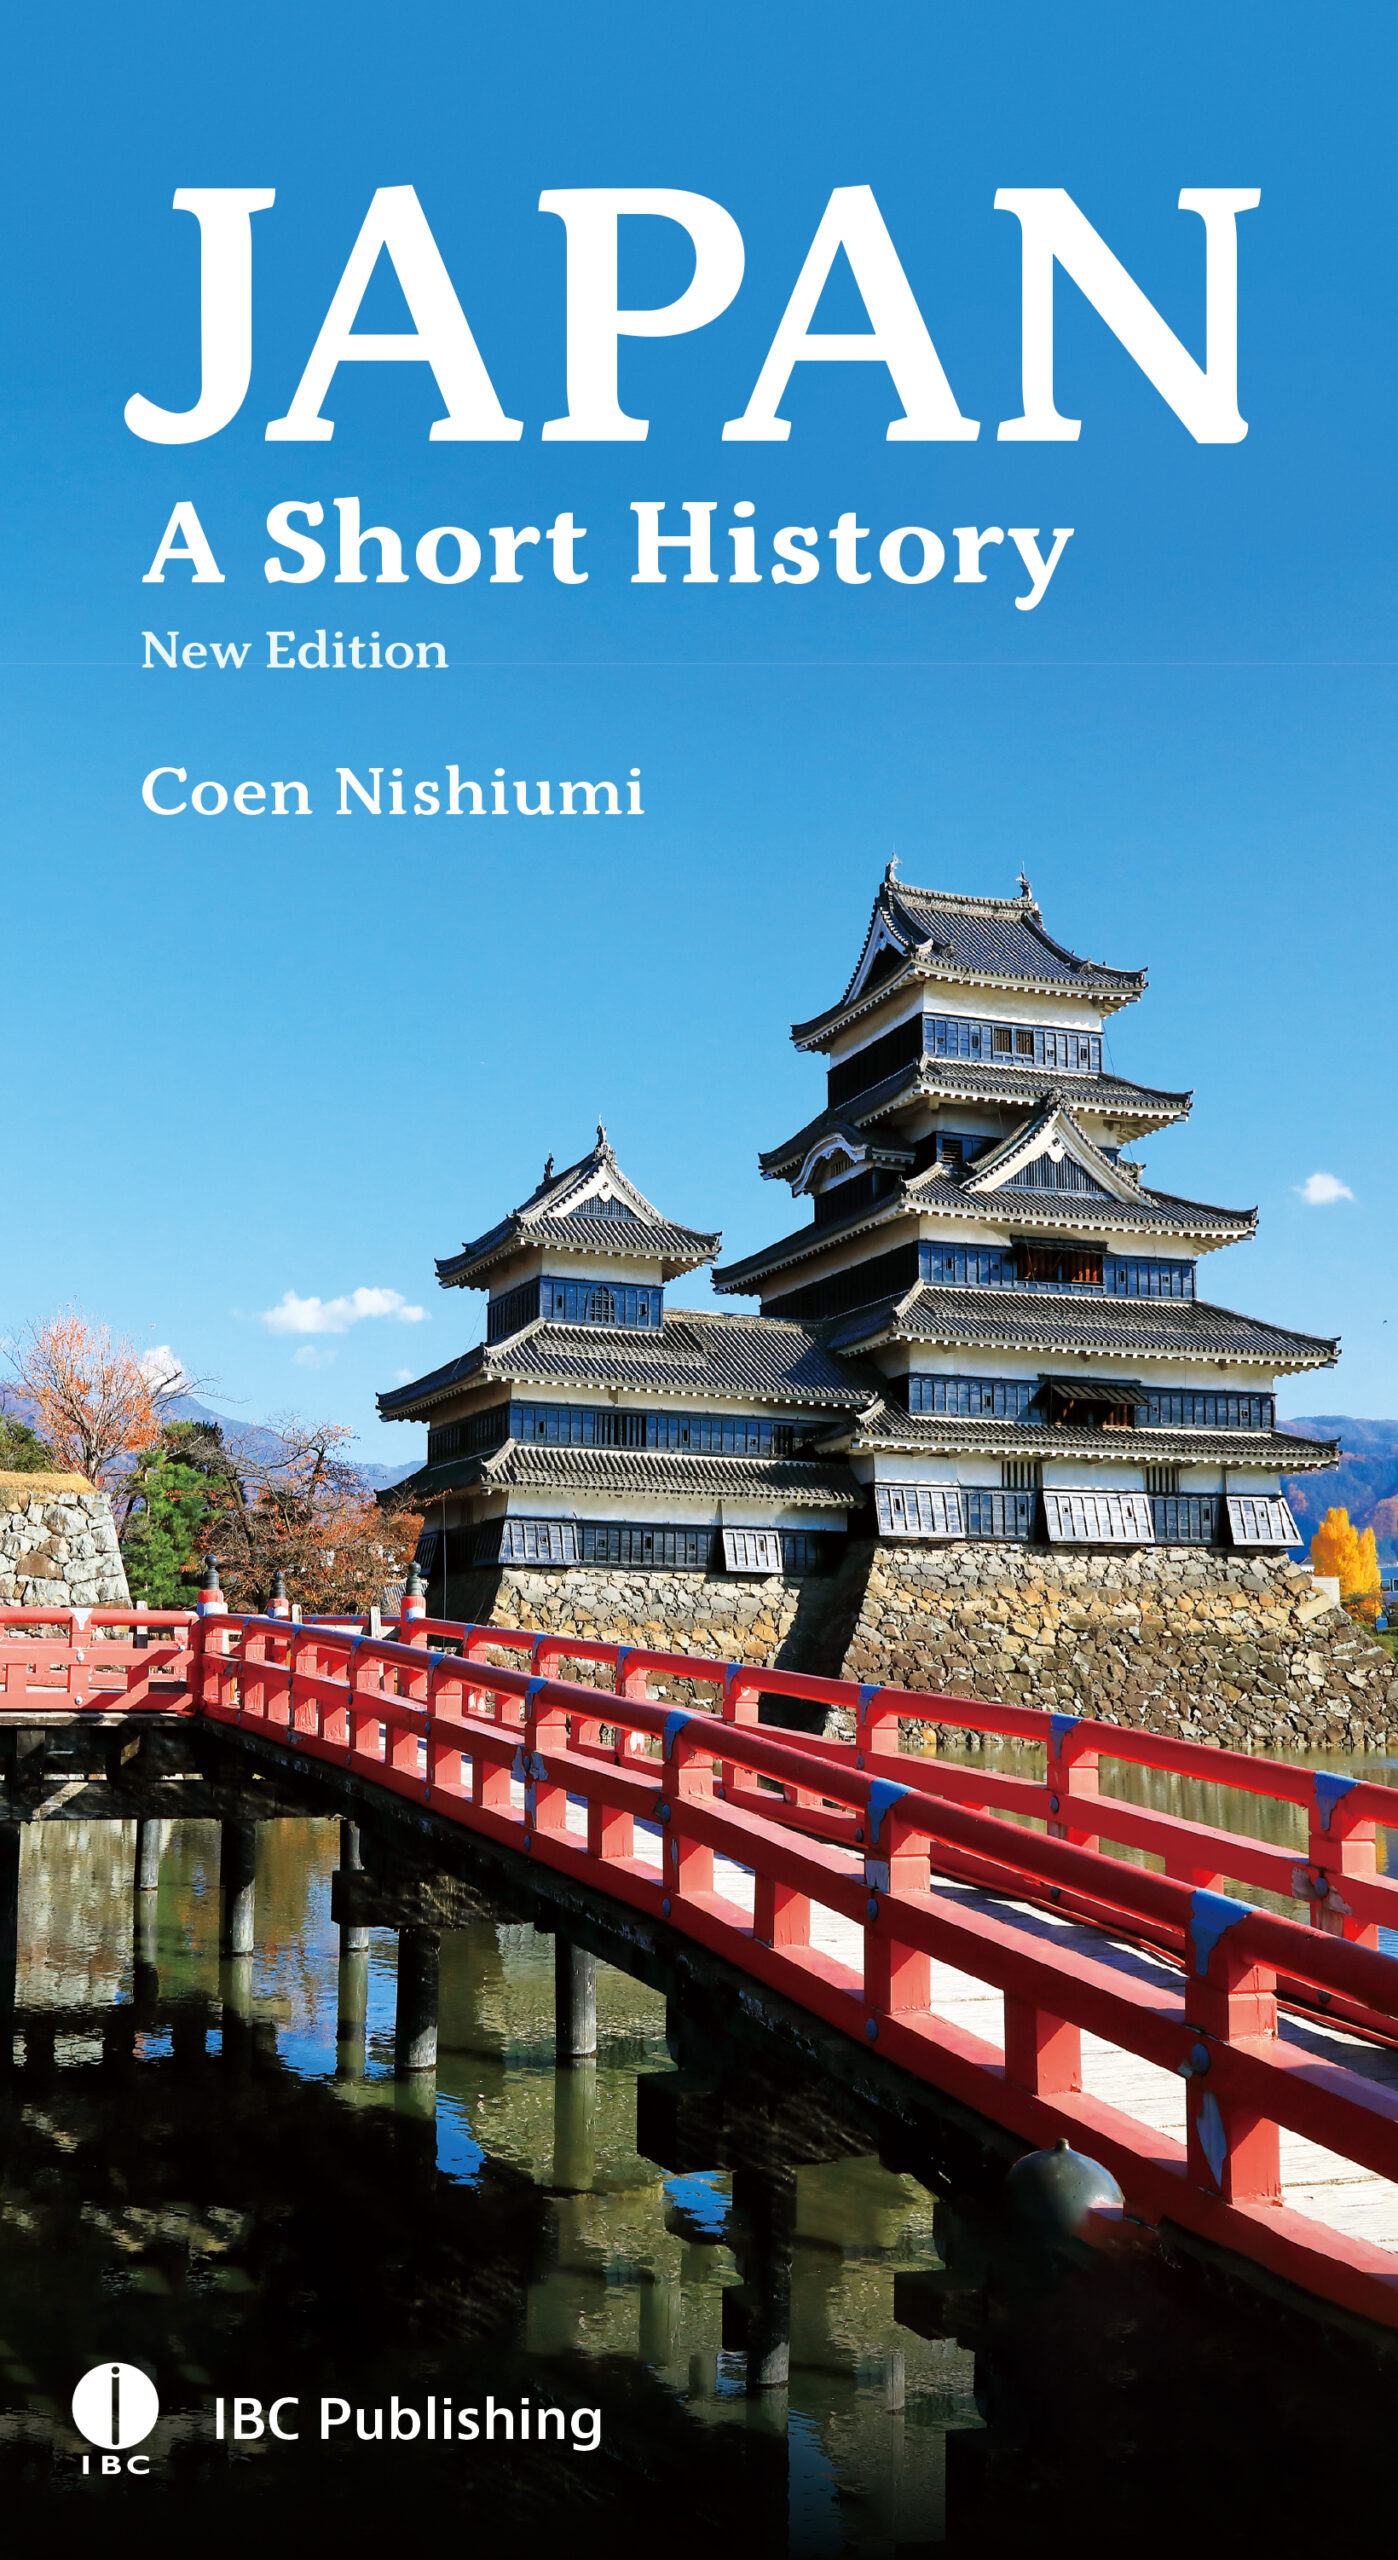 JAPAN: A Short History New Edition